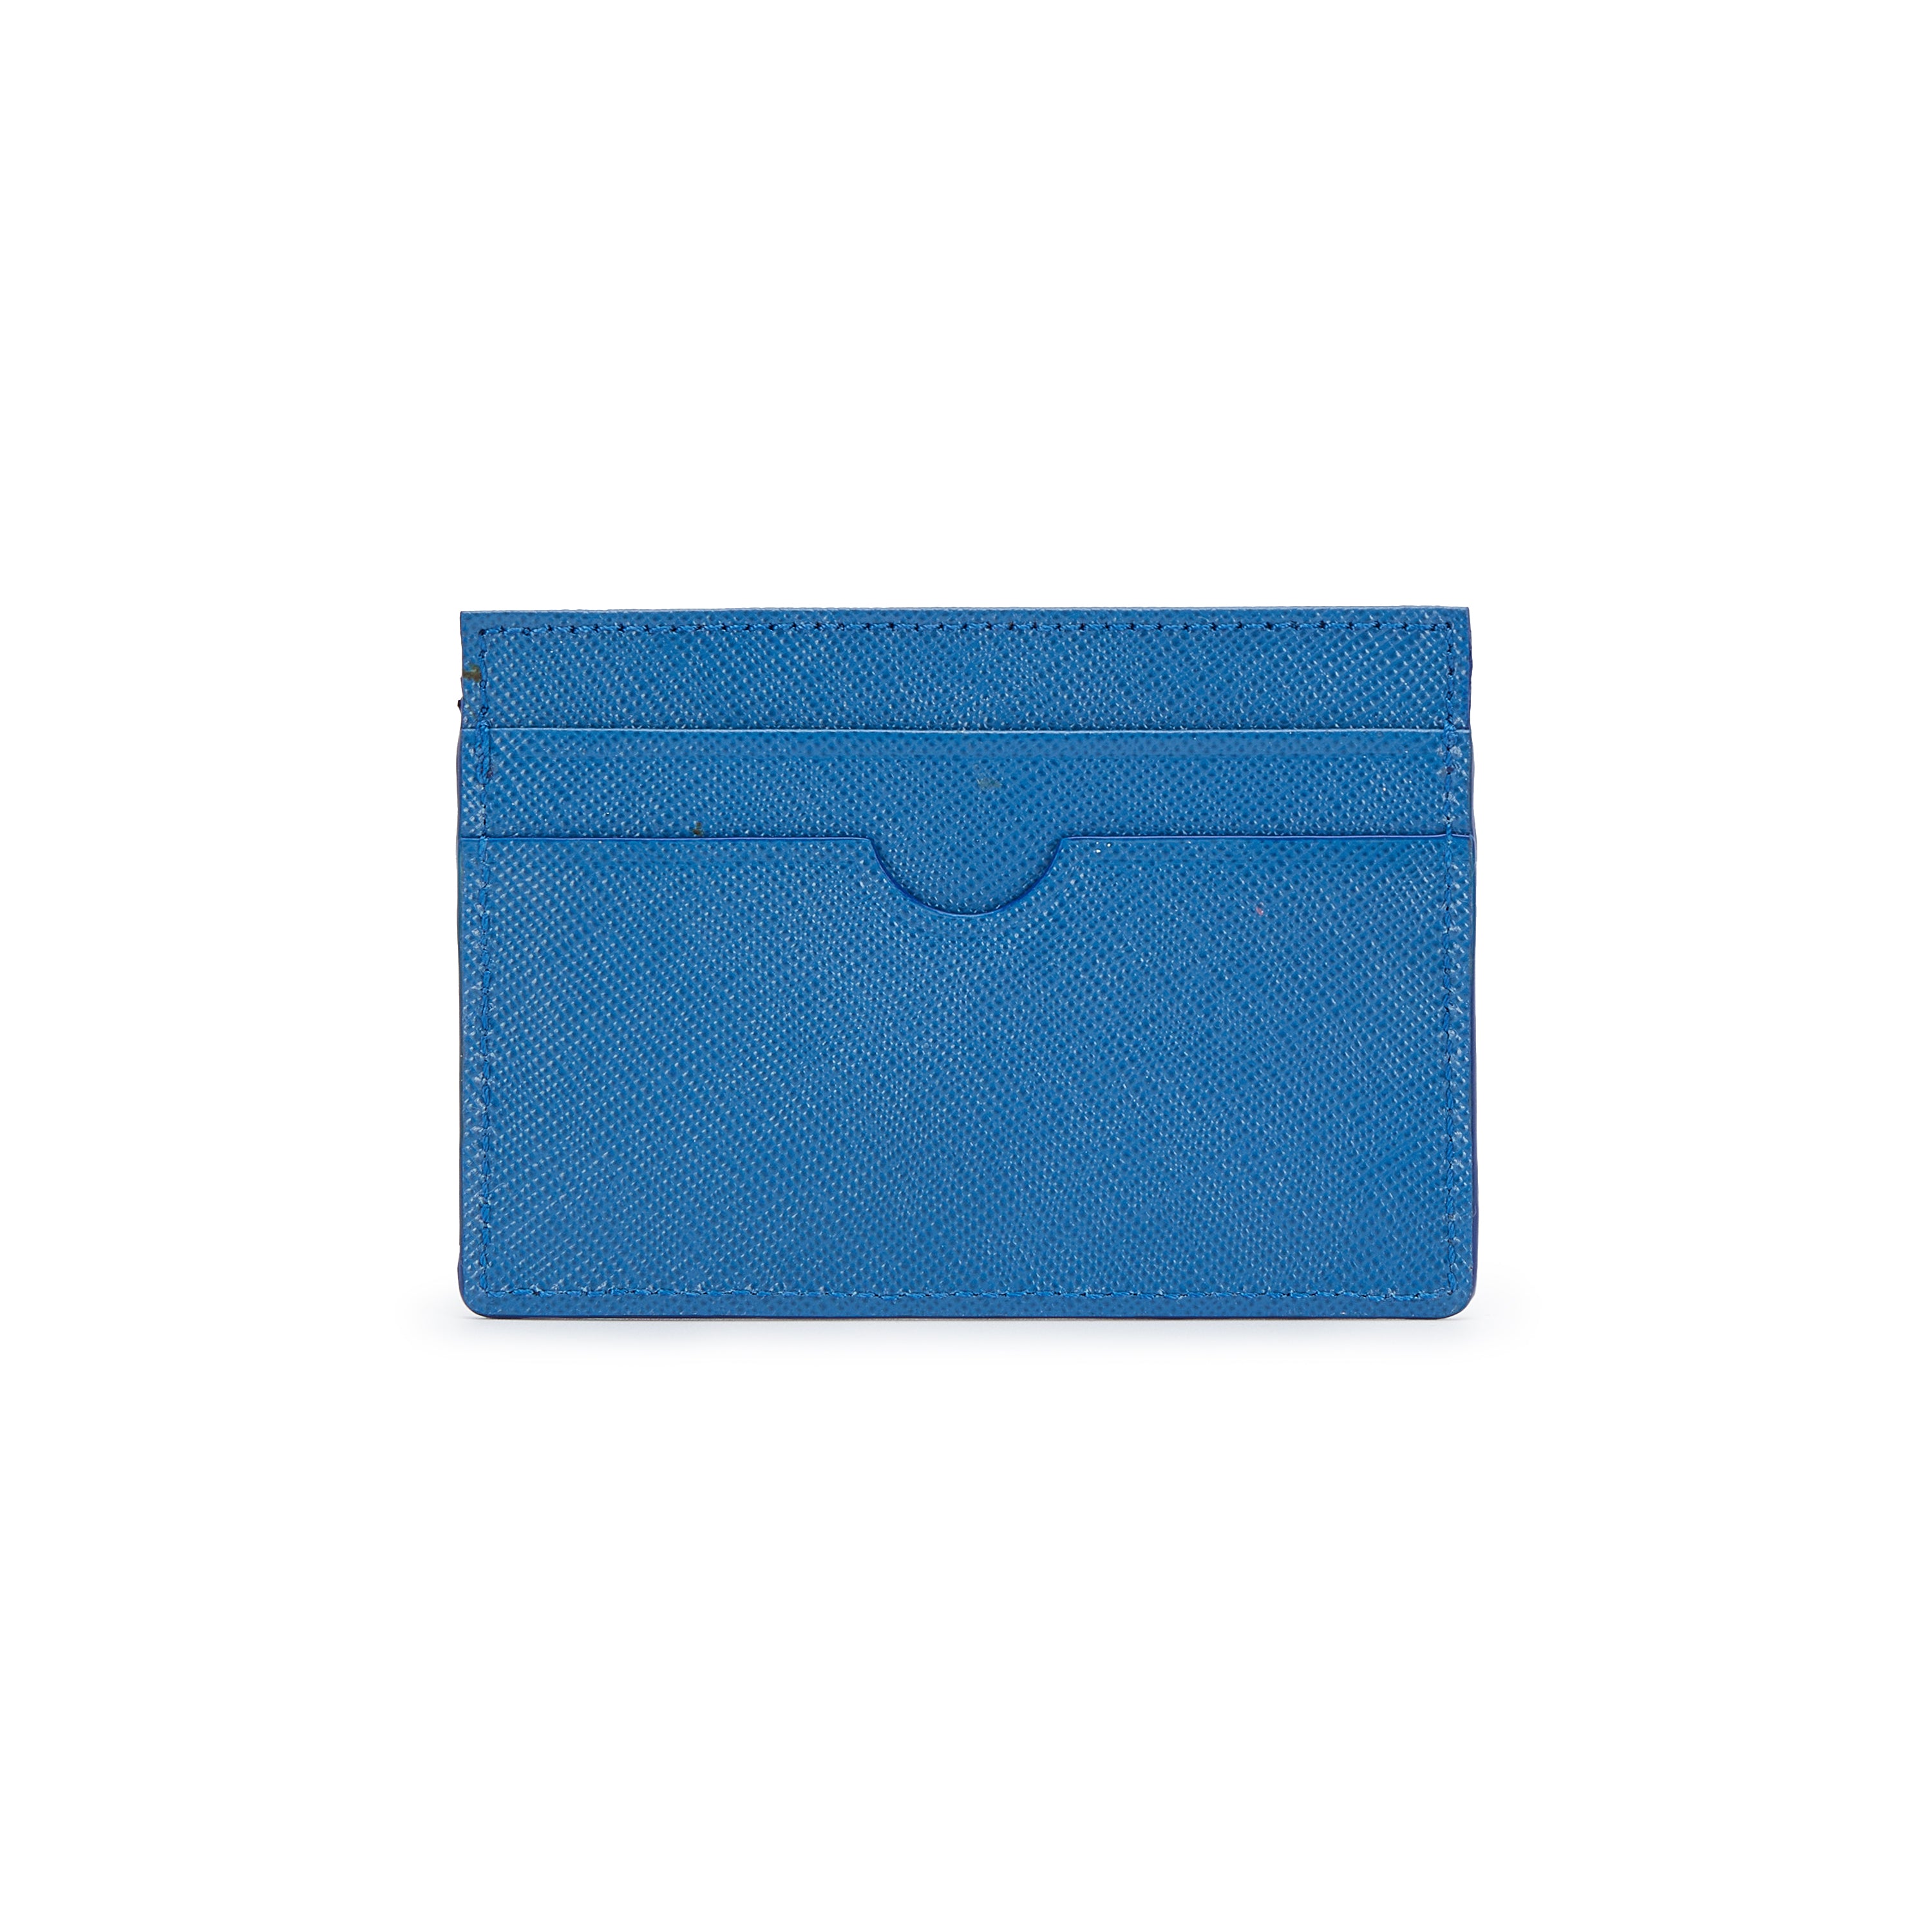 Blue unisex wallet